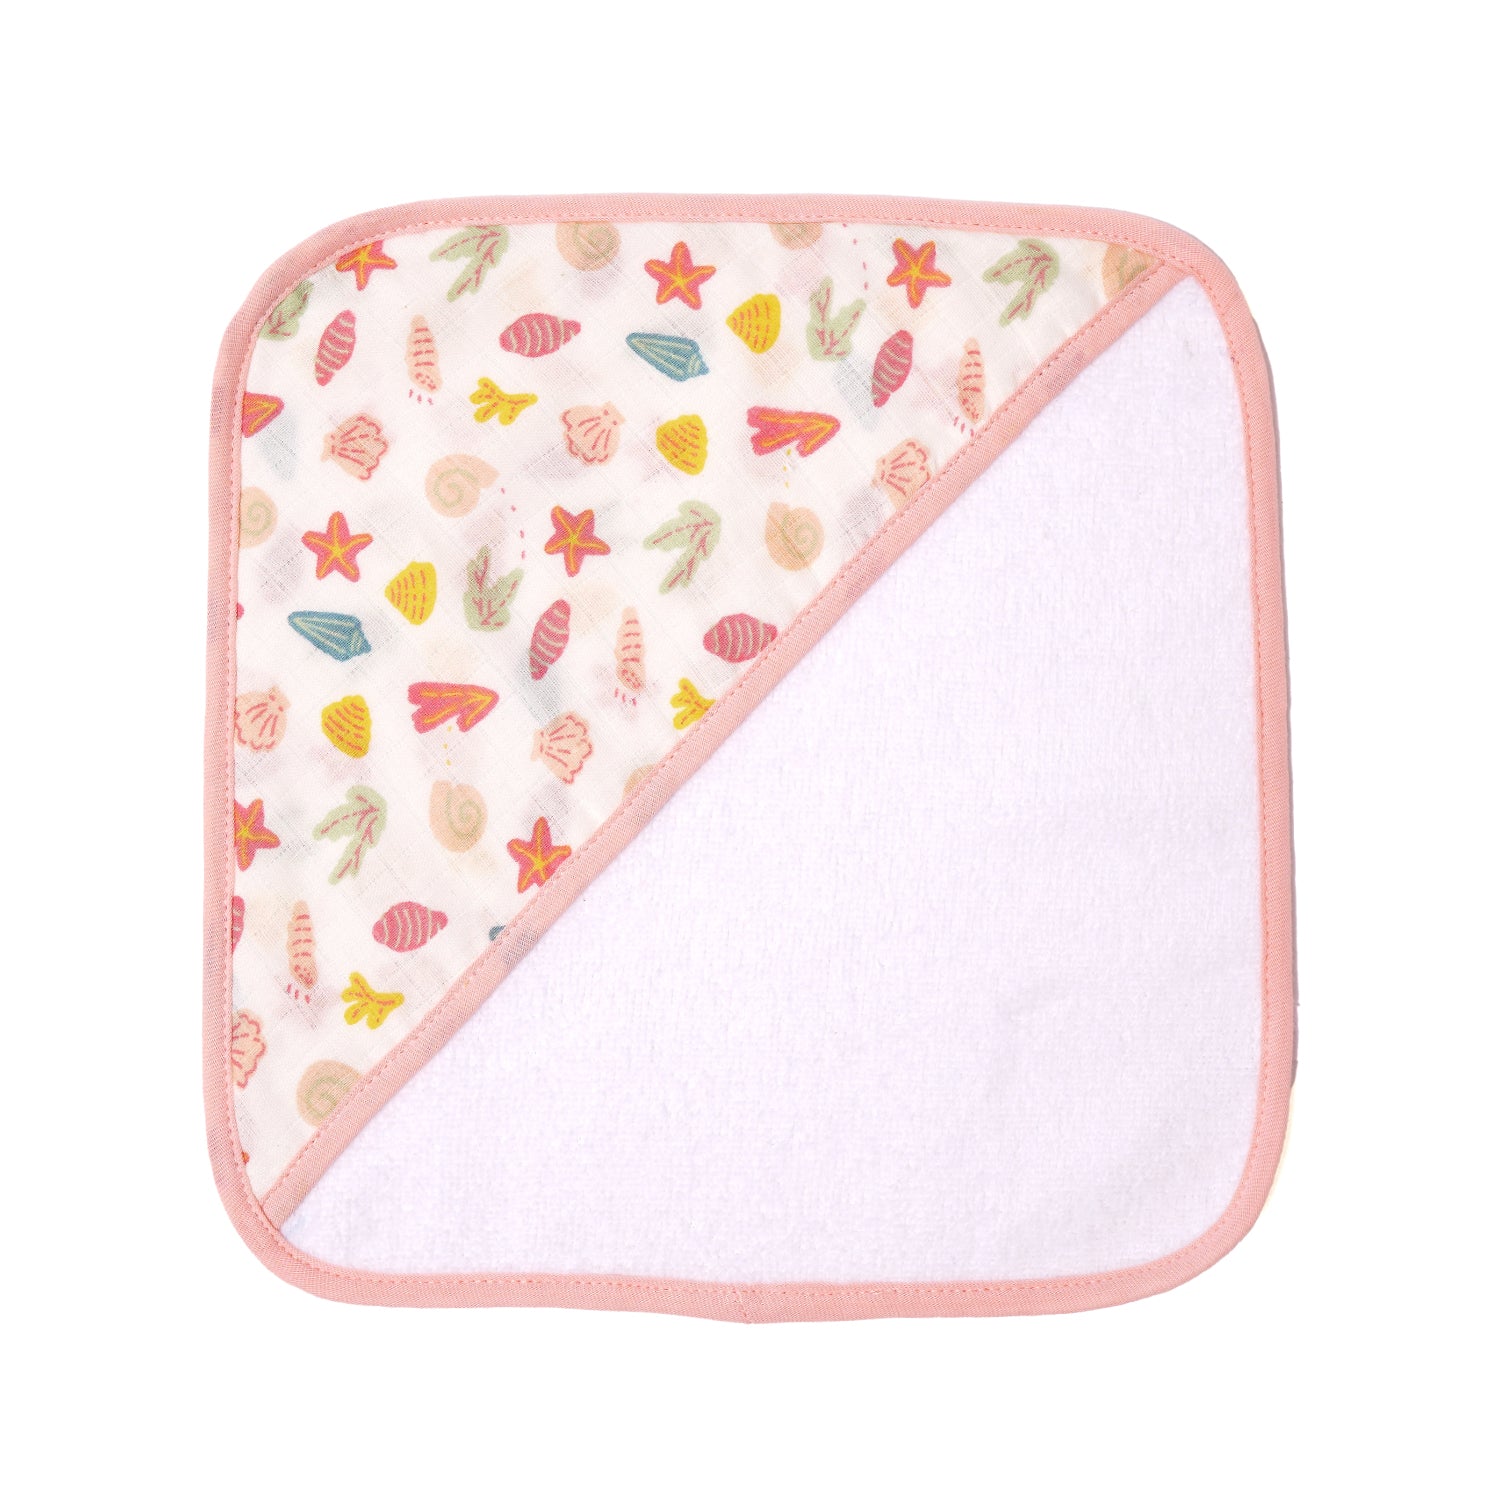 Tidy Sleep Muslin Baby Face Cloth for New Born (Washable, Reusable Extra Soft Baby Face Towel) Asorted Colour